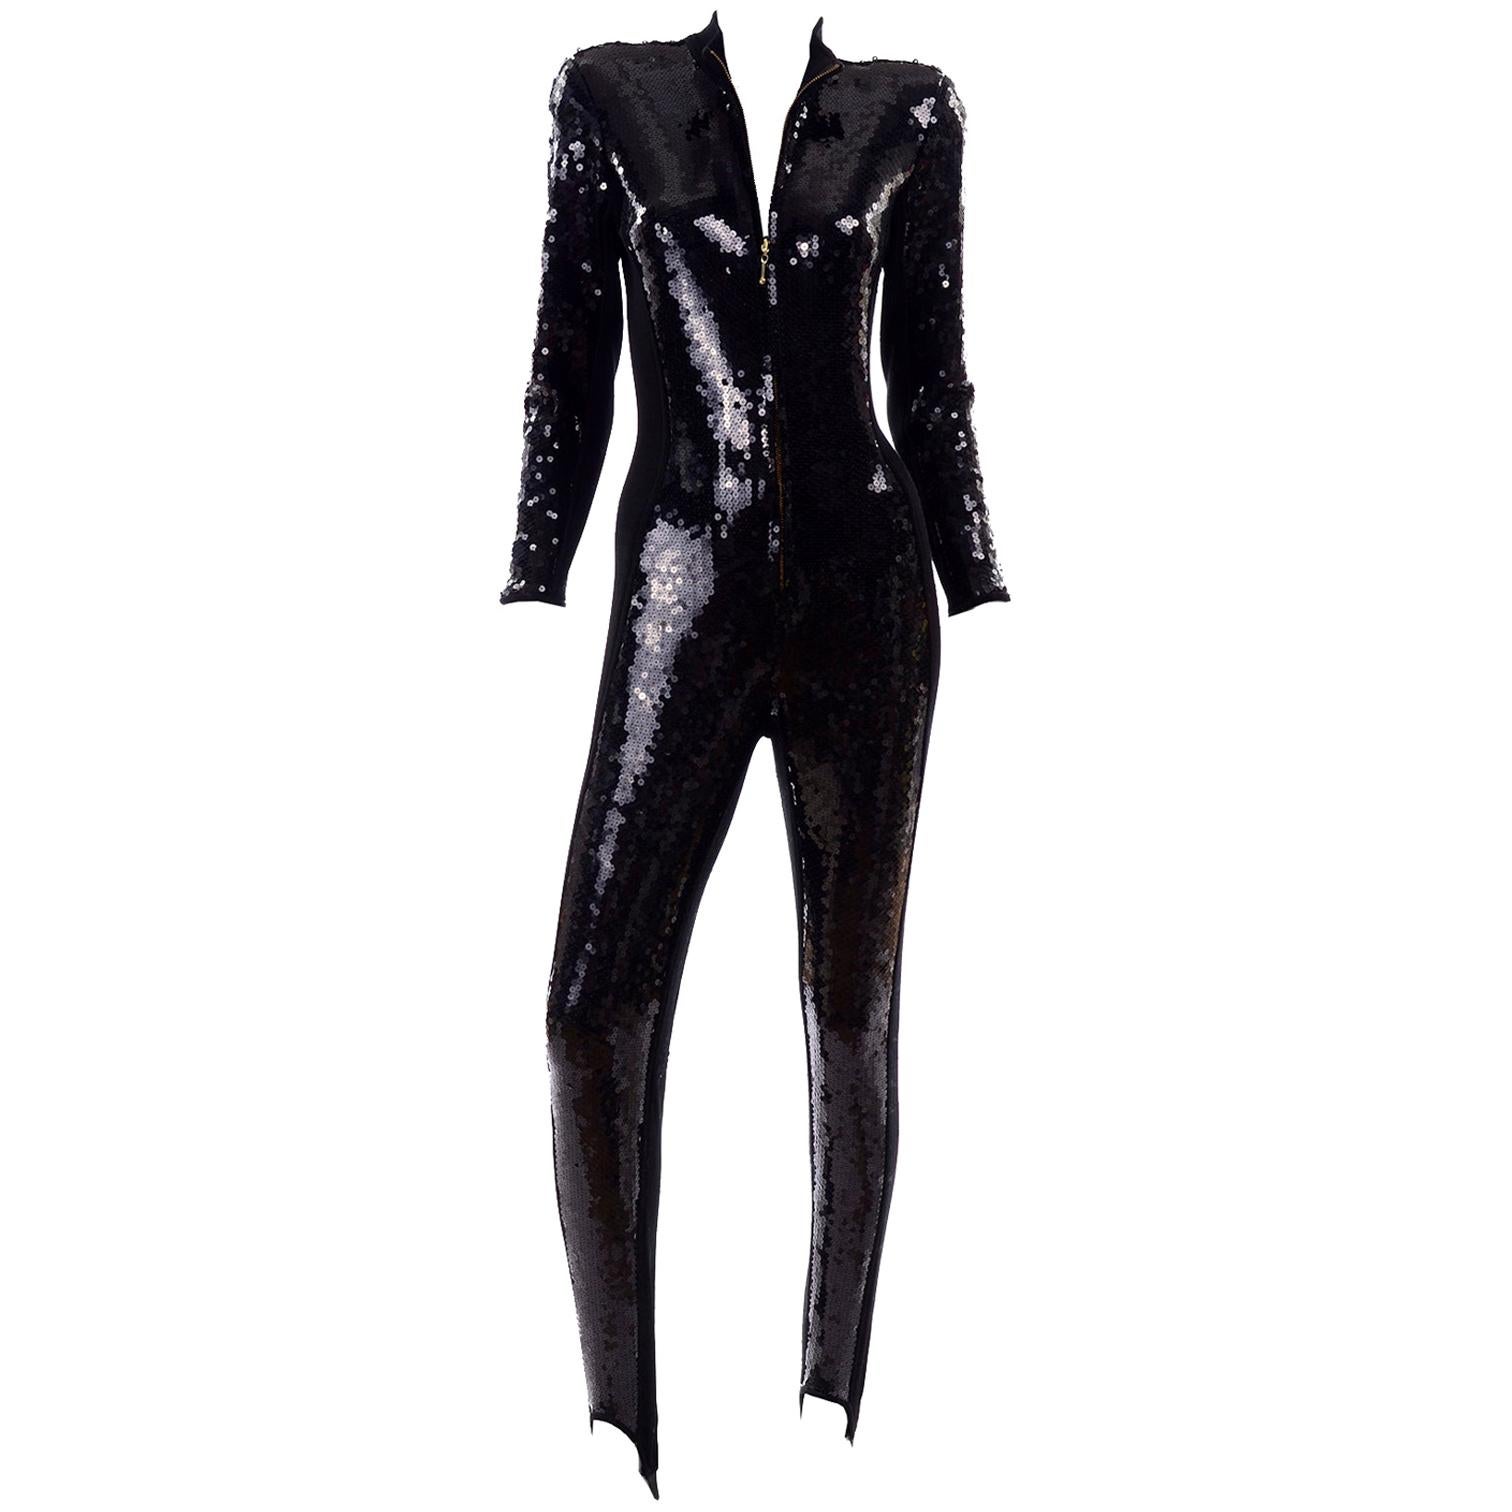 1980s Lillie Rubin Vintage Black Sequin Jumpsuit Catsuit With Stirrups